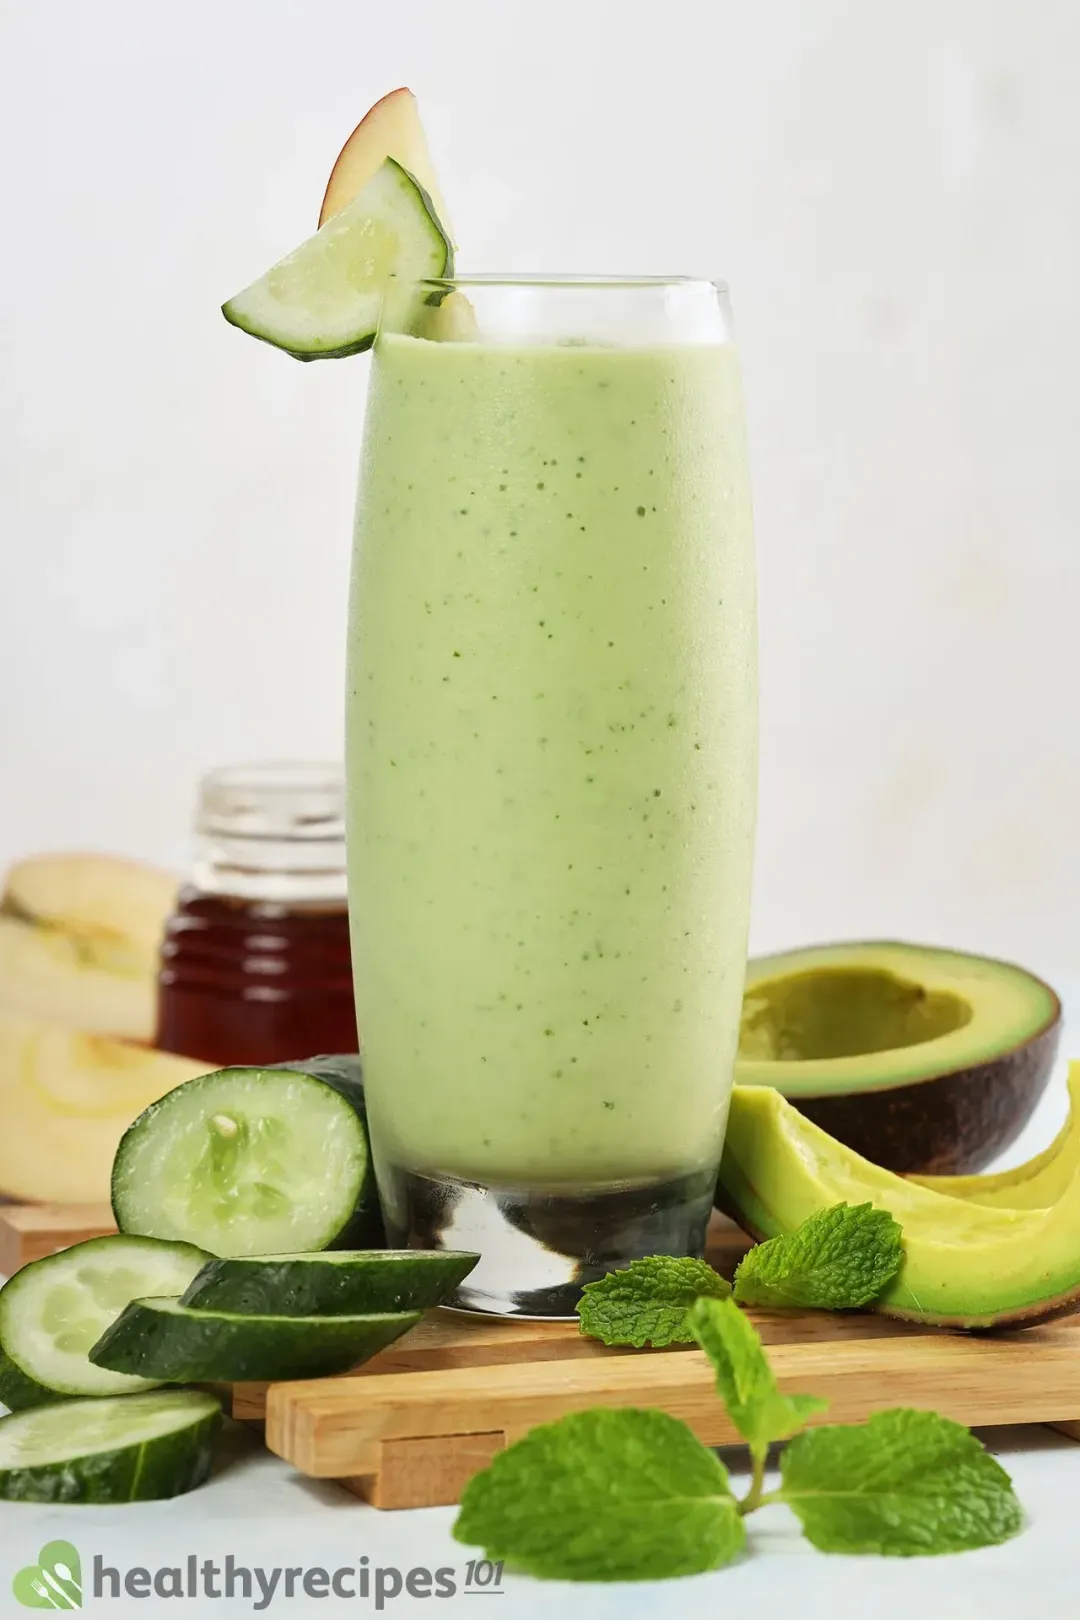 Benefits of Cucumber Smoothie